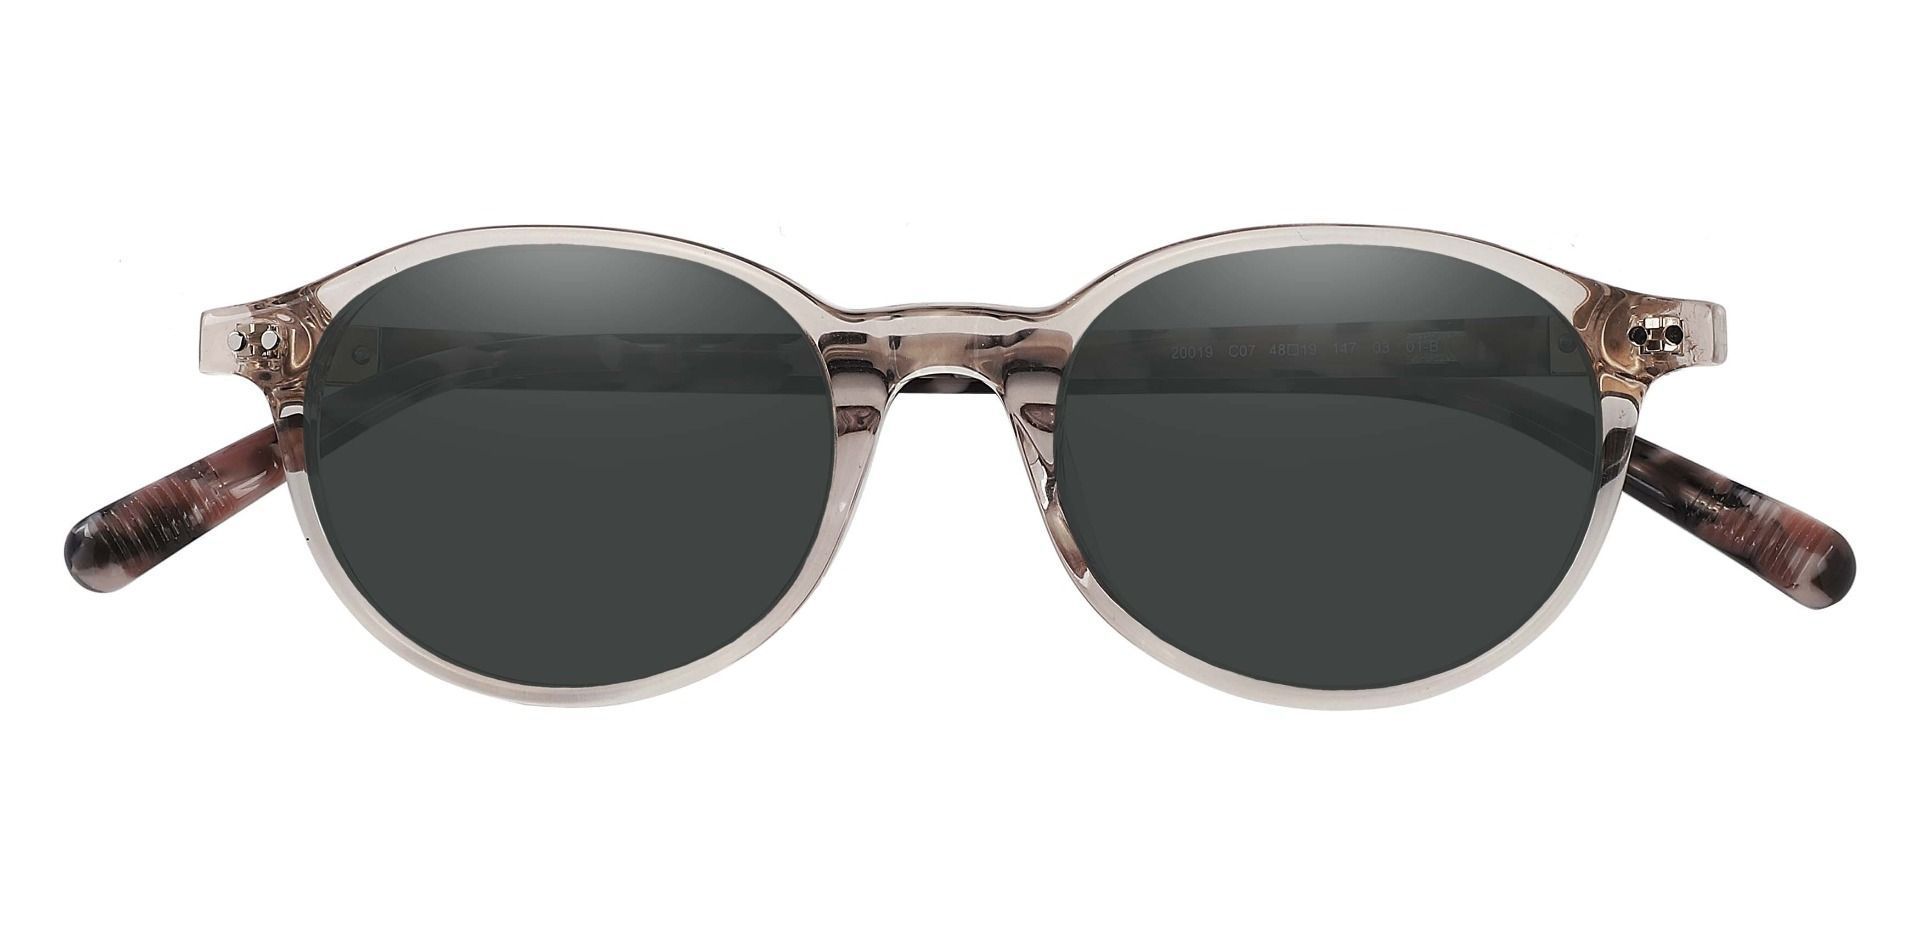 Avon Oval Progressive Sunglasses - Clear Frame With Gray Lenses